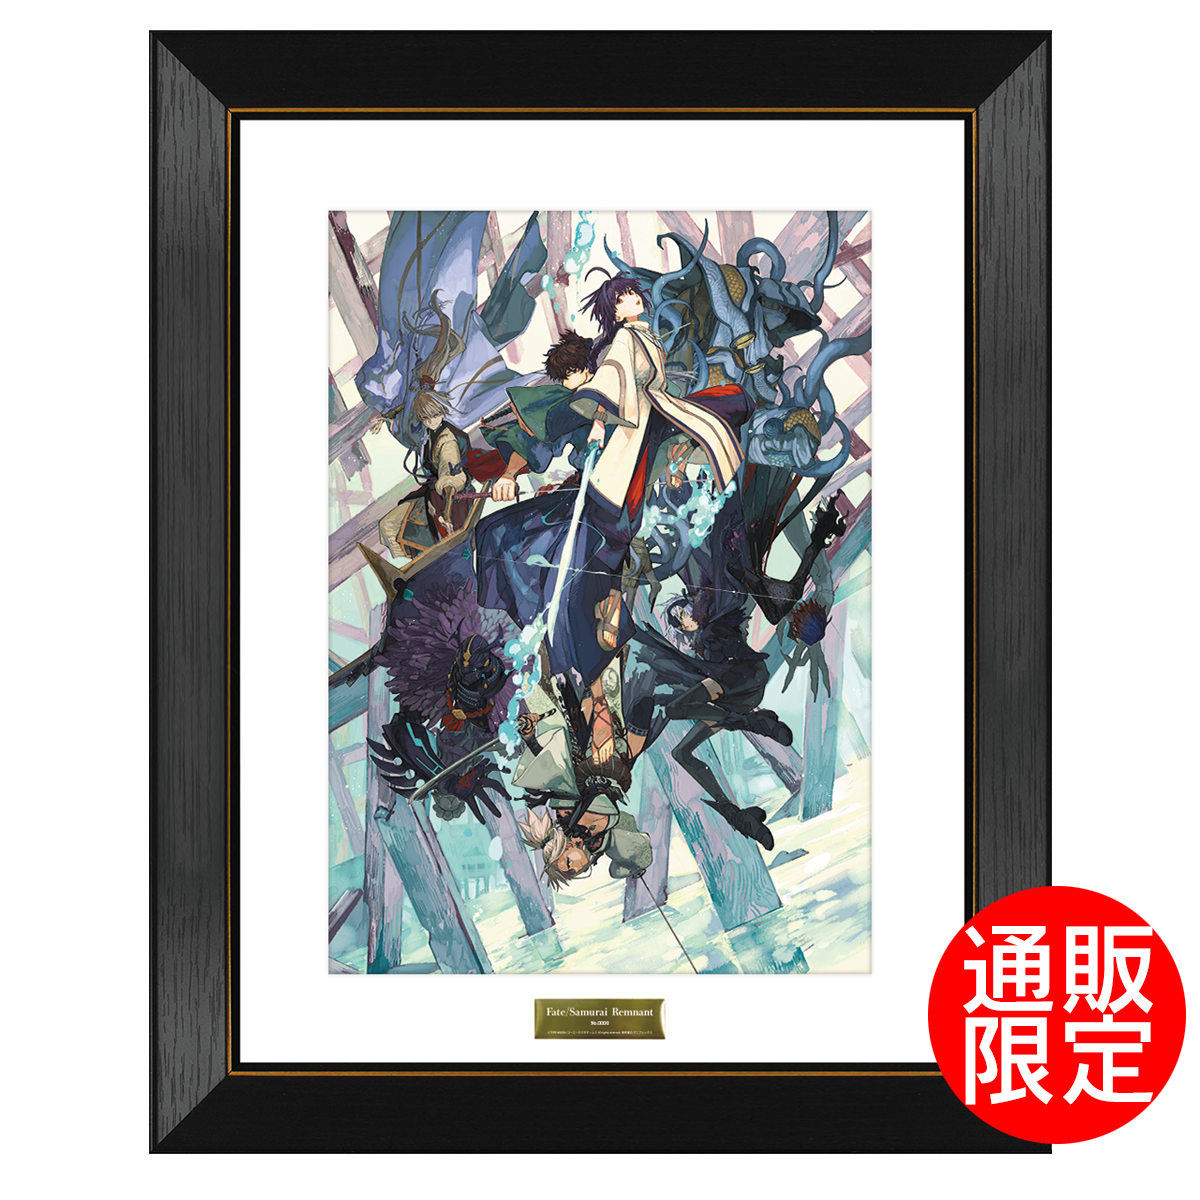 Fate/Samurai Remnant A3アートコレクション -渡れい氏 描き下ろしイメージビジュアル-